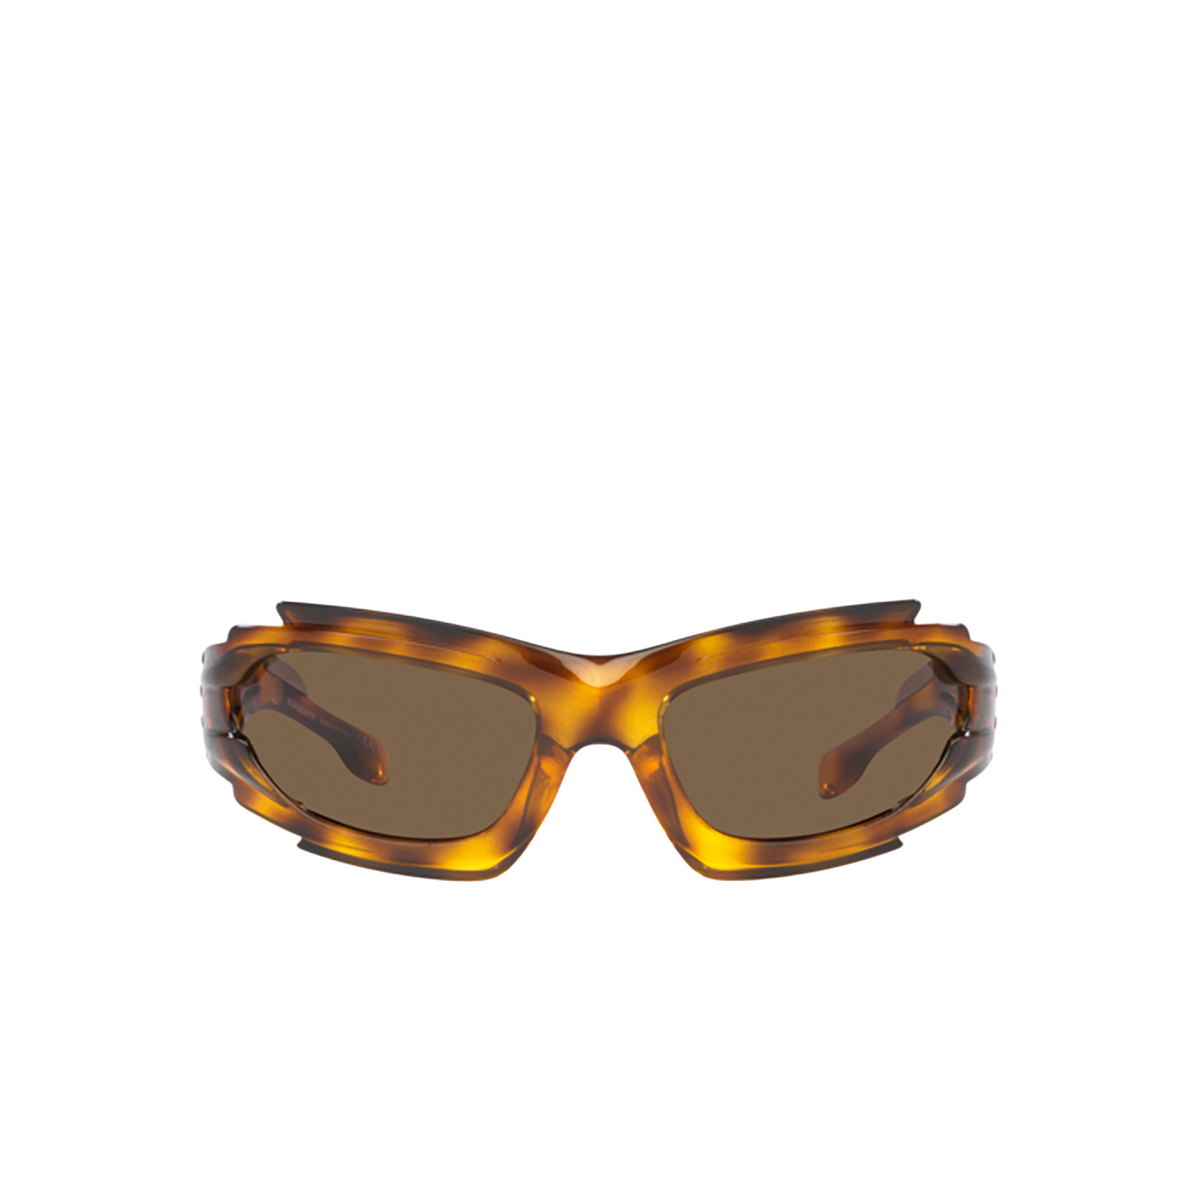 Burberry MARLOWE Sunglasses 401373 Havana - front view